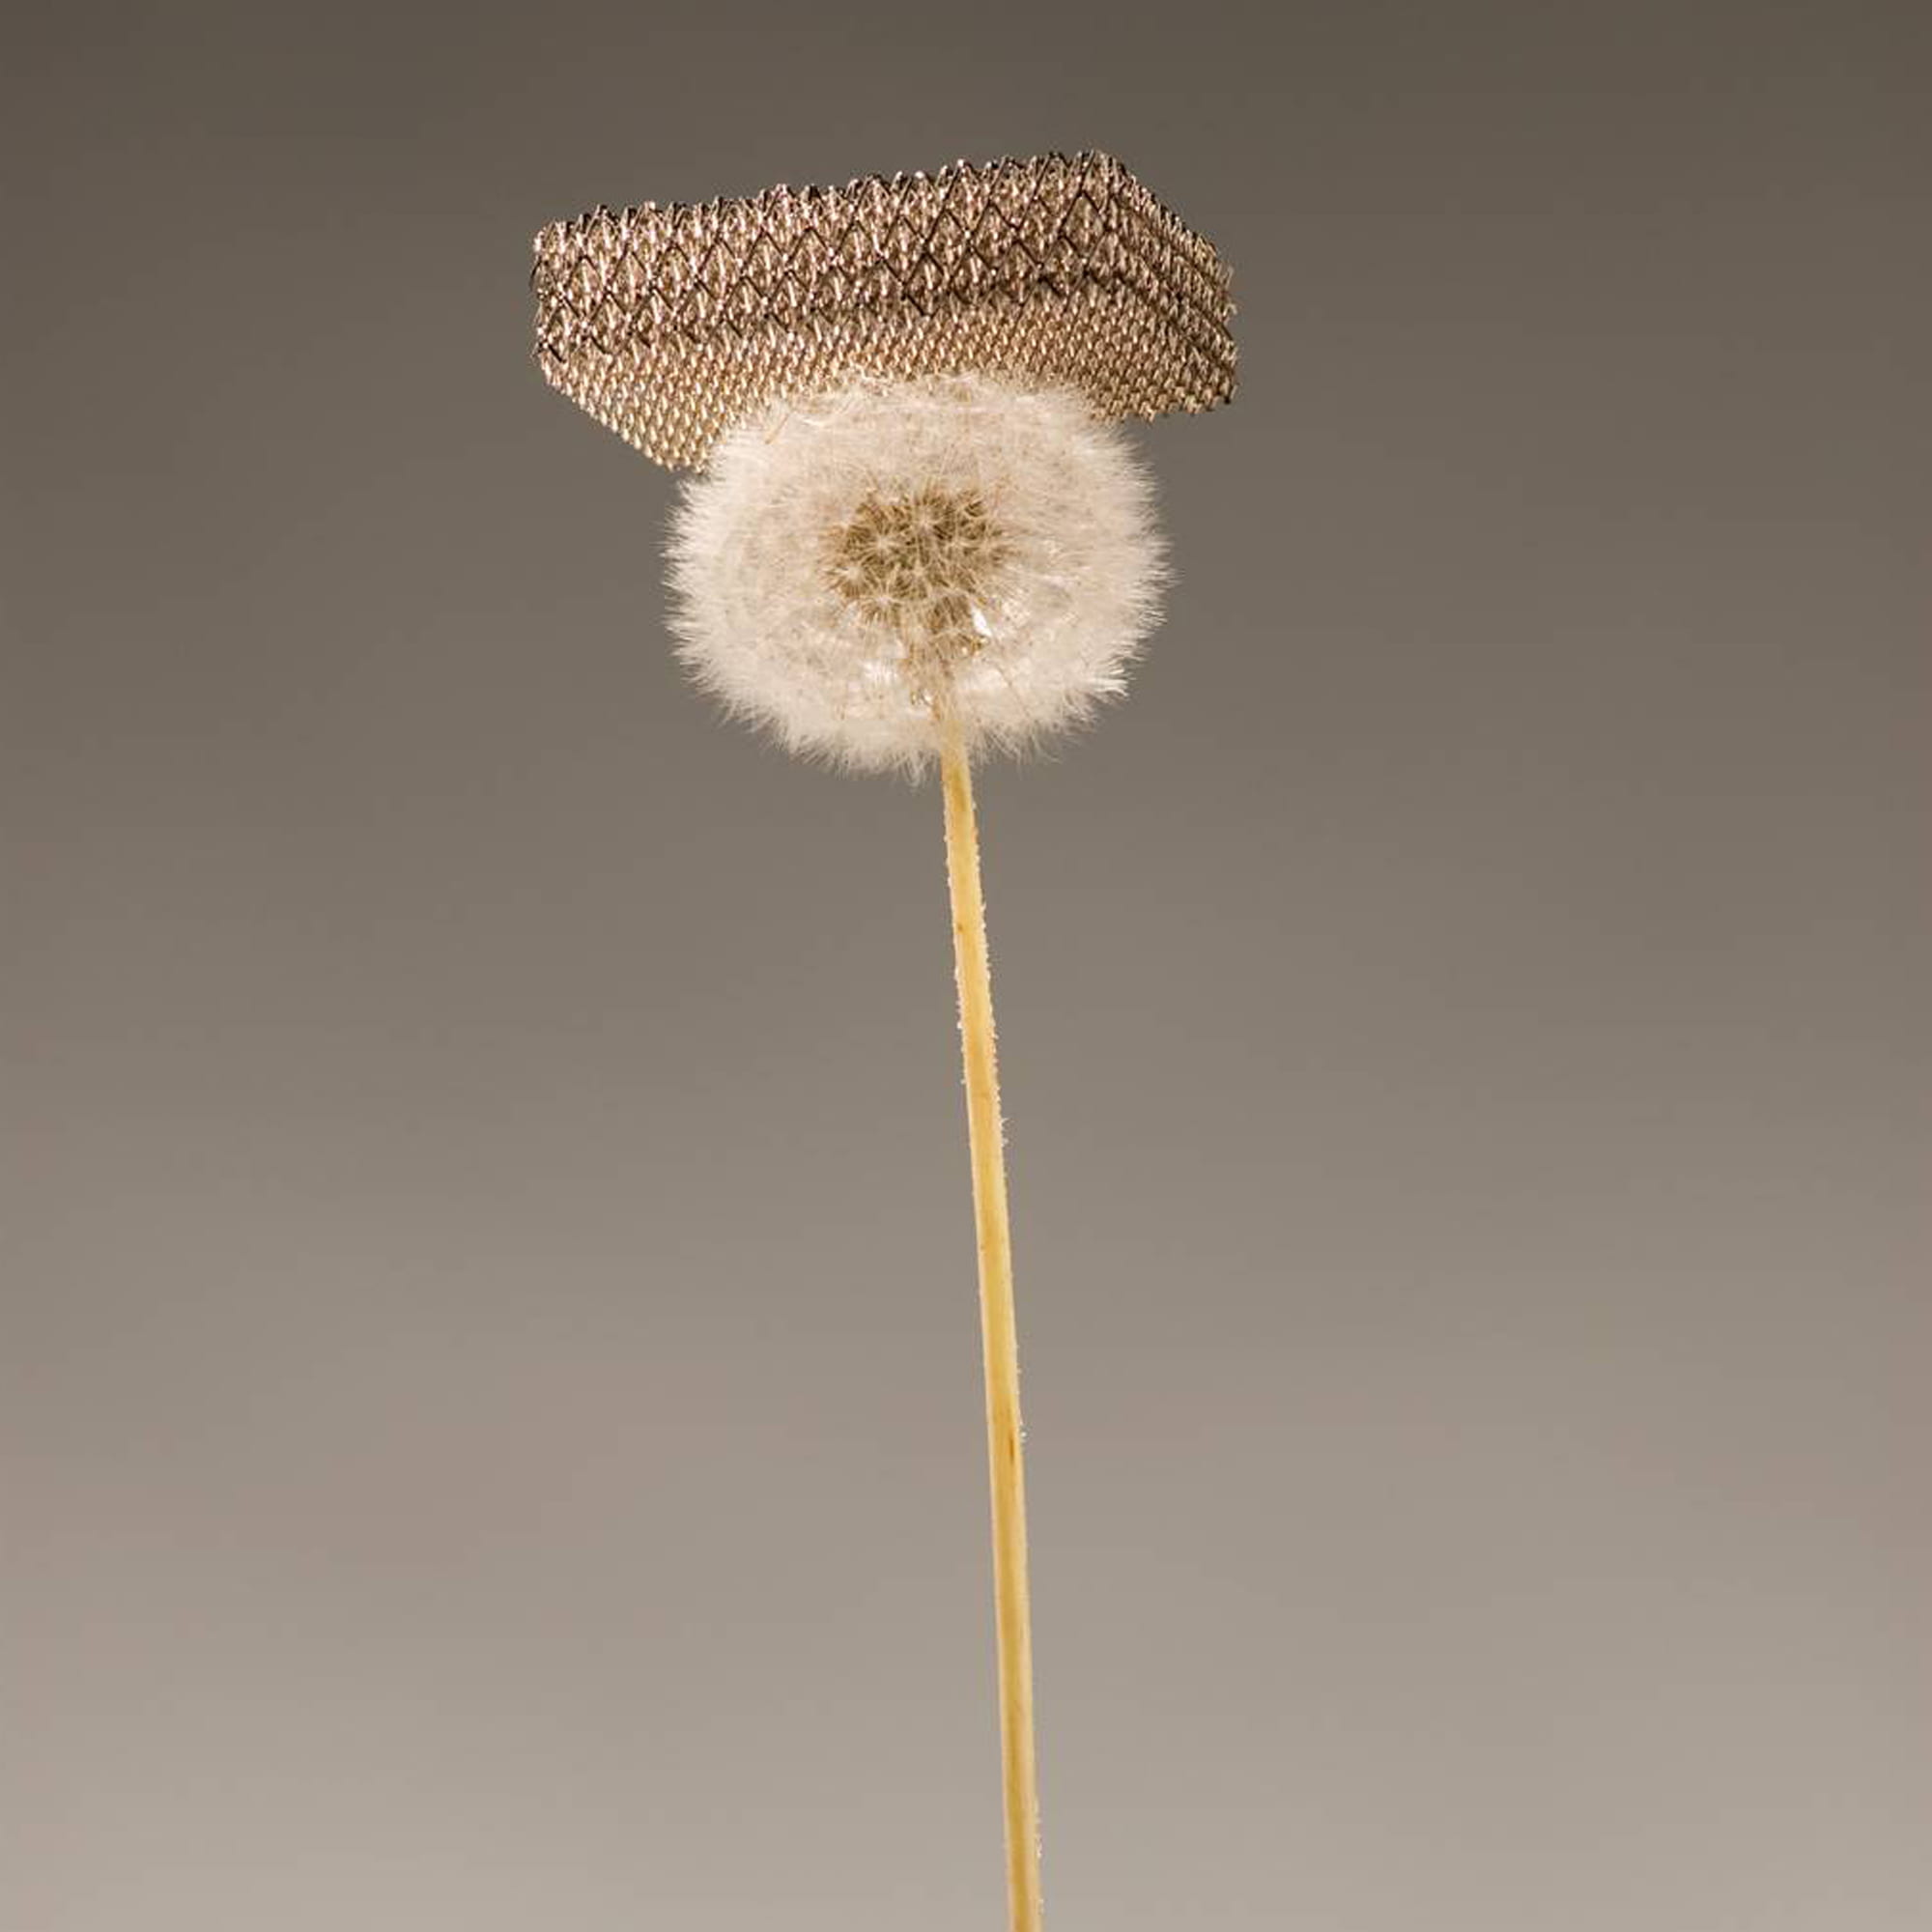 World's lightest metal sitting atop a dandelion fluff